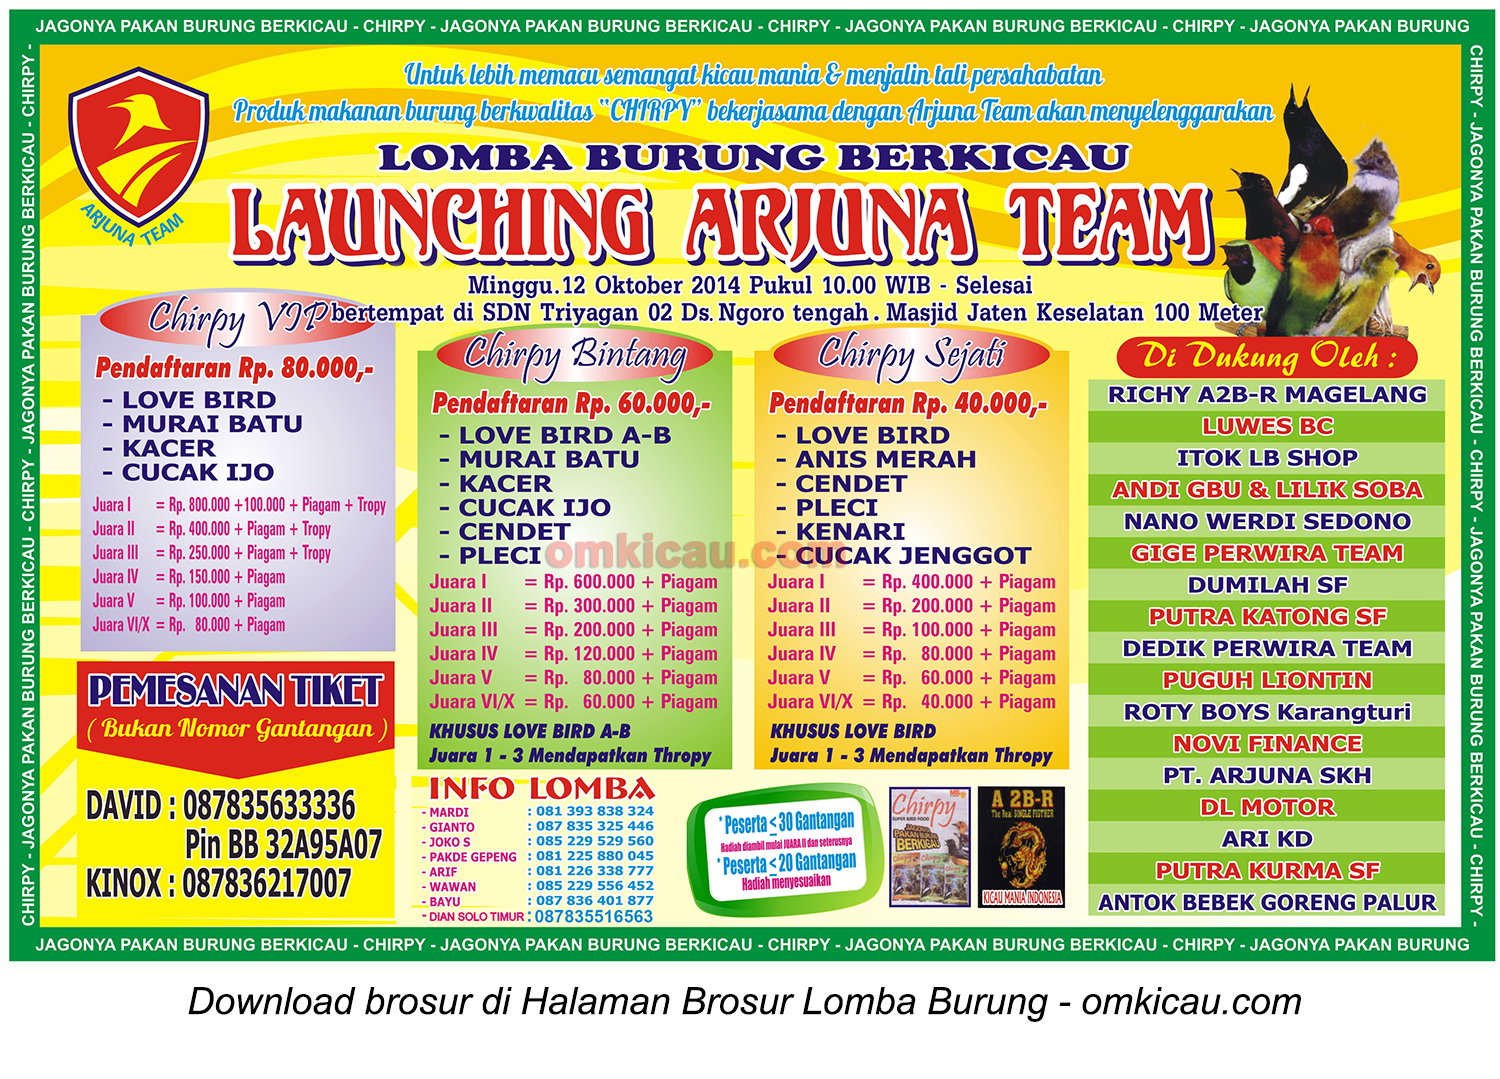 Brosur Lomba Burung Berkicau Launching Arjuna Team, Sukoharjo, 12 Oktober 2014